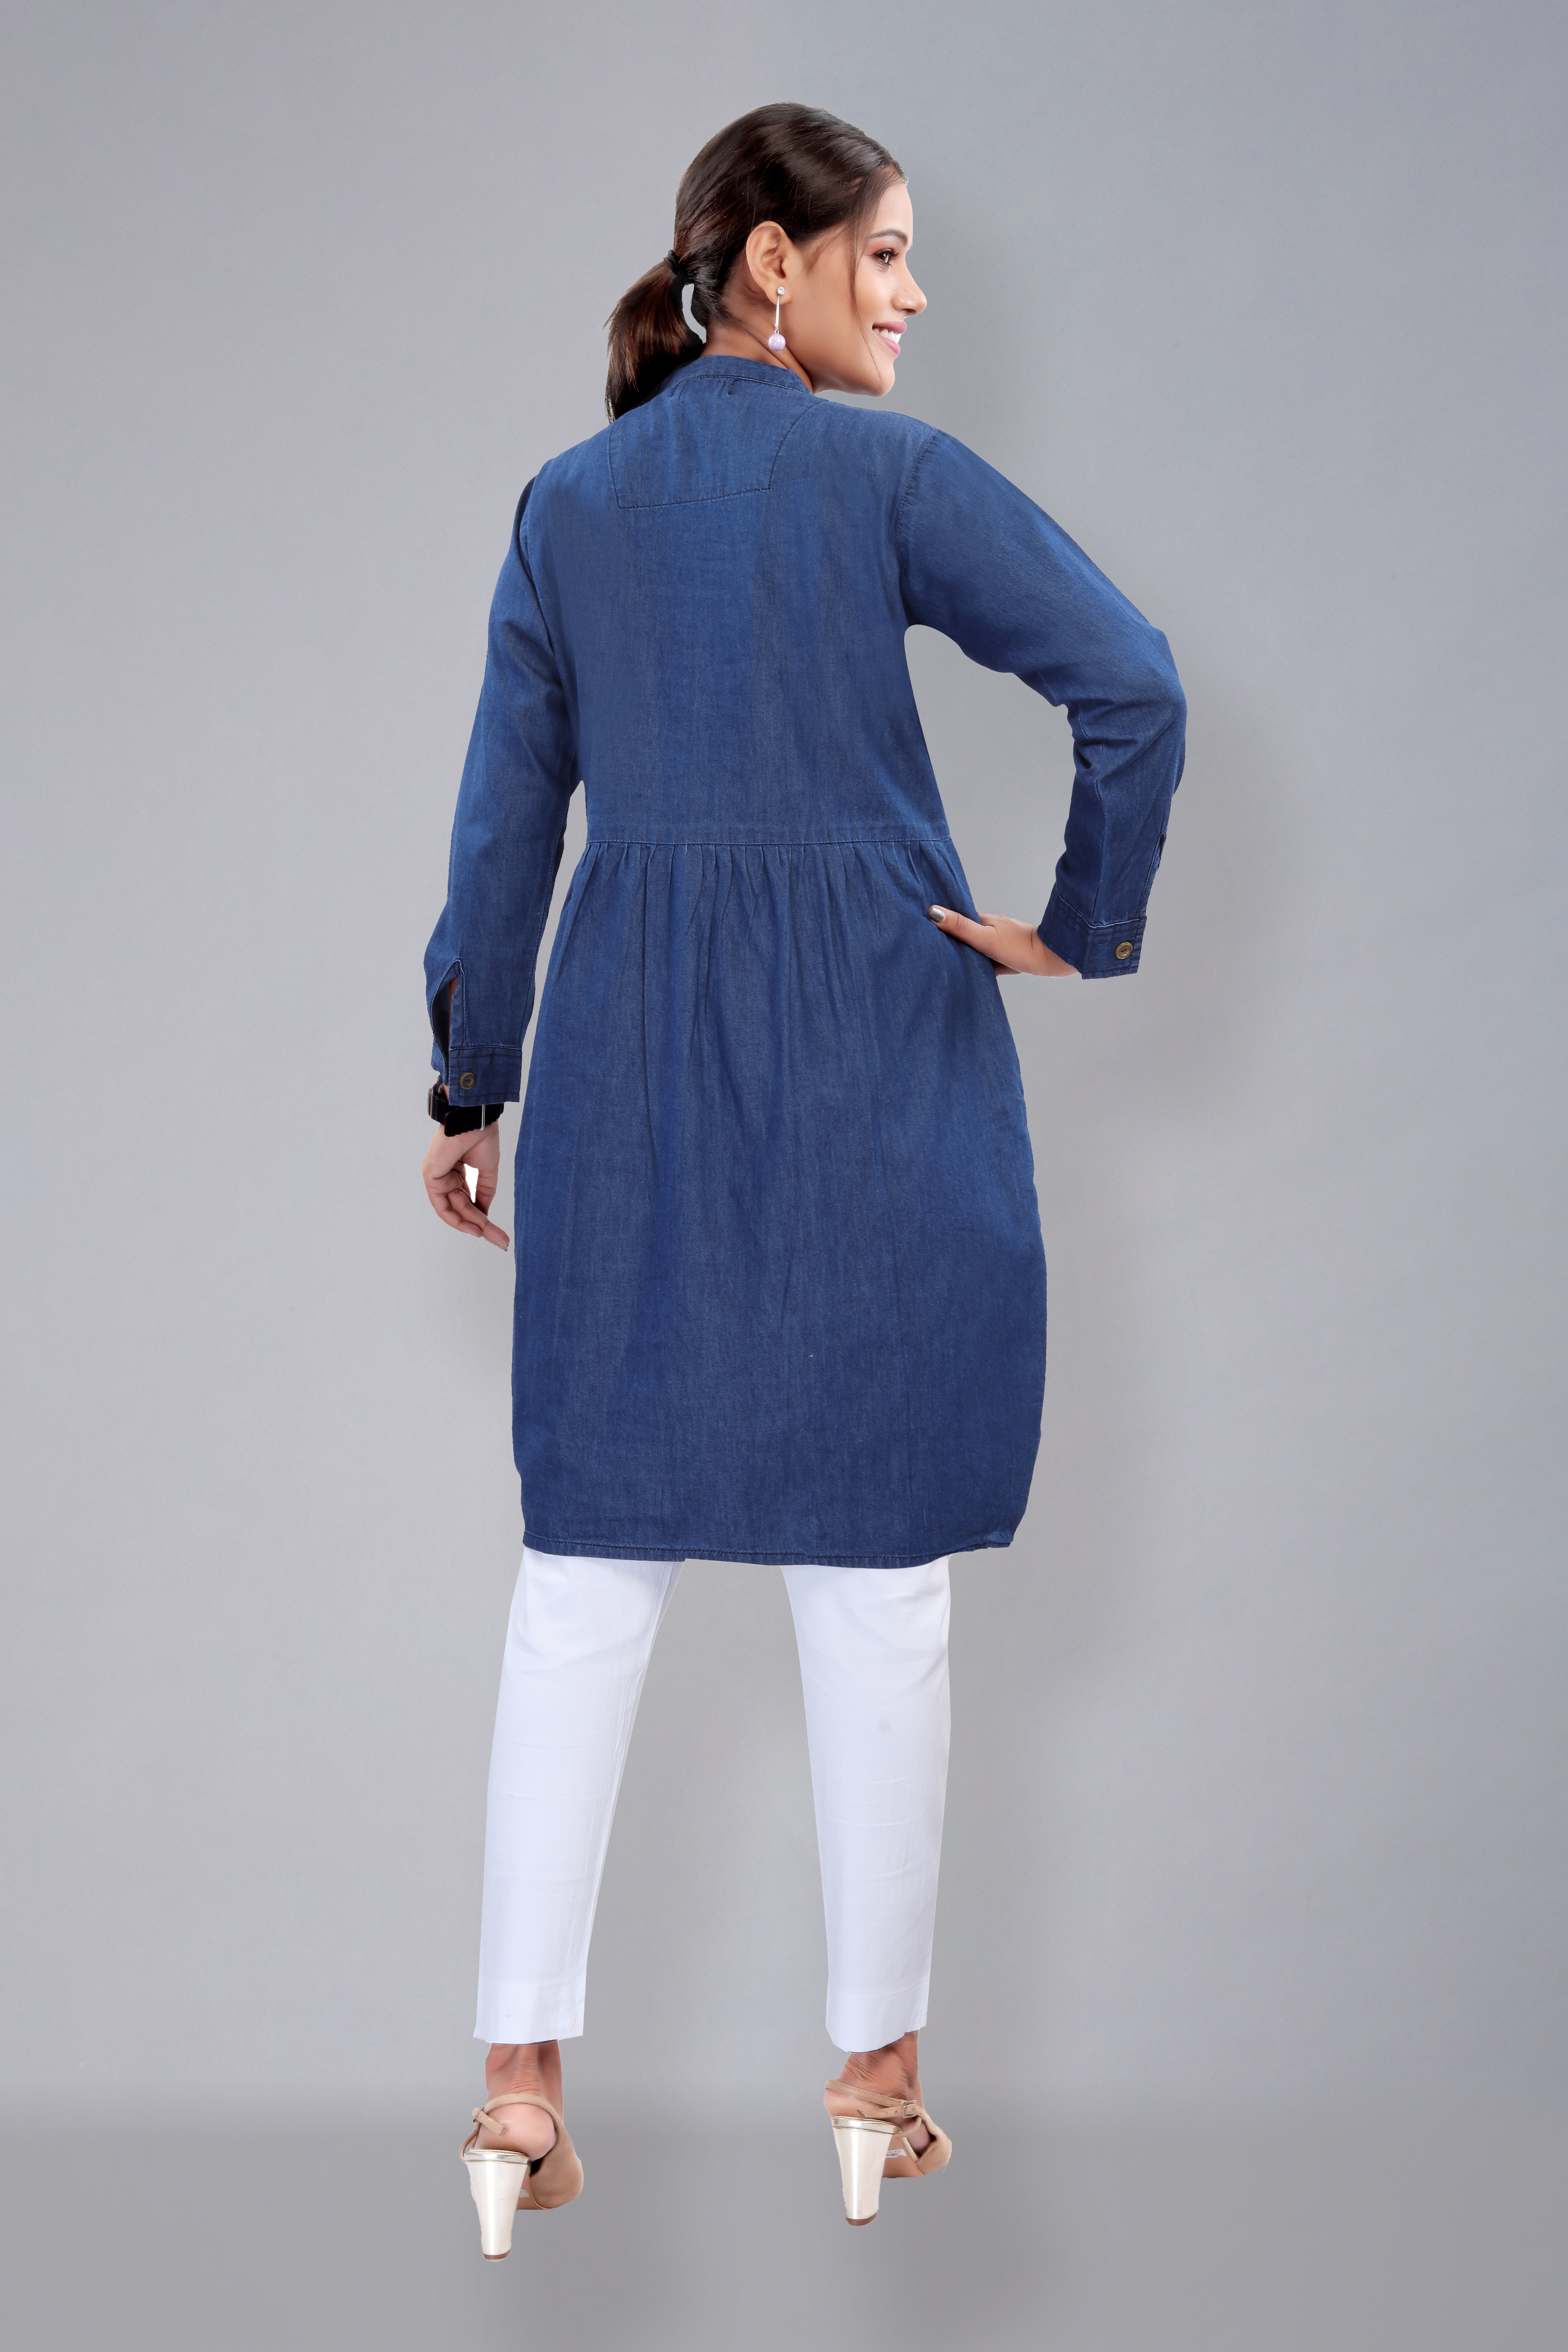 Denim short kurti full sleeves (D6027)